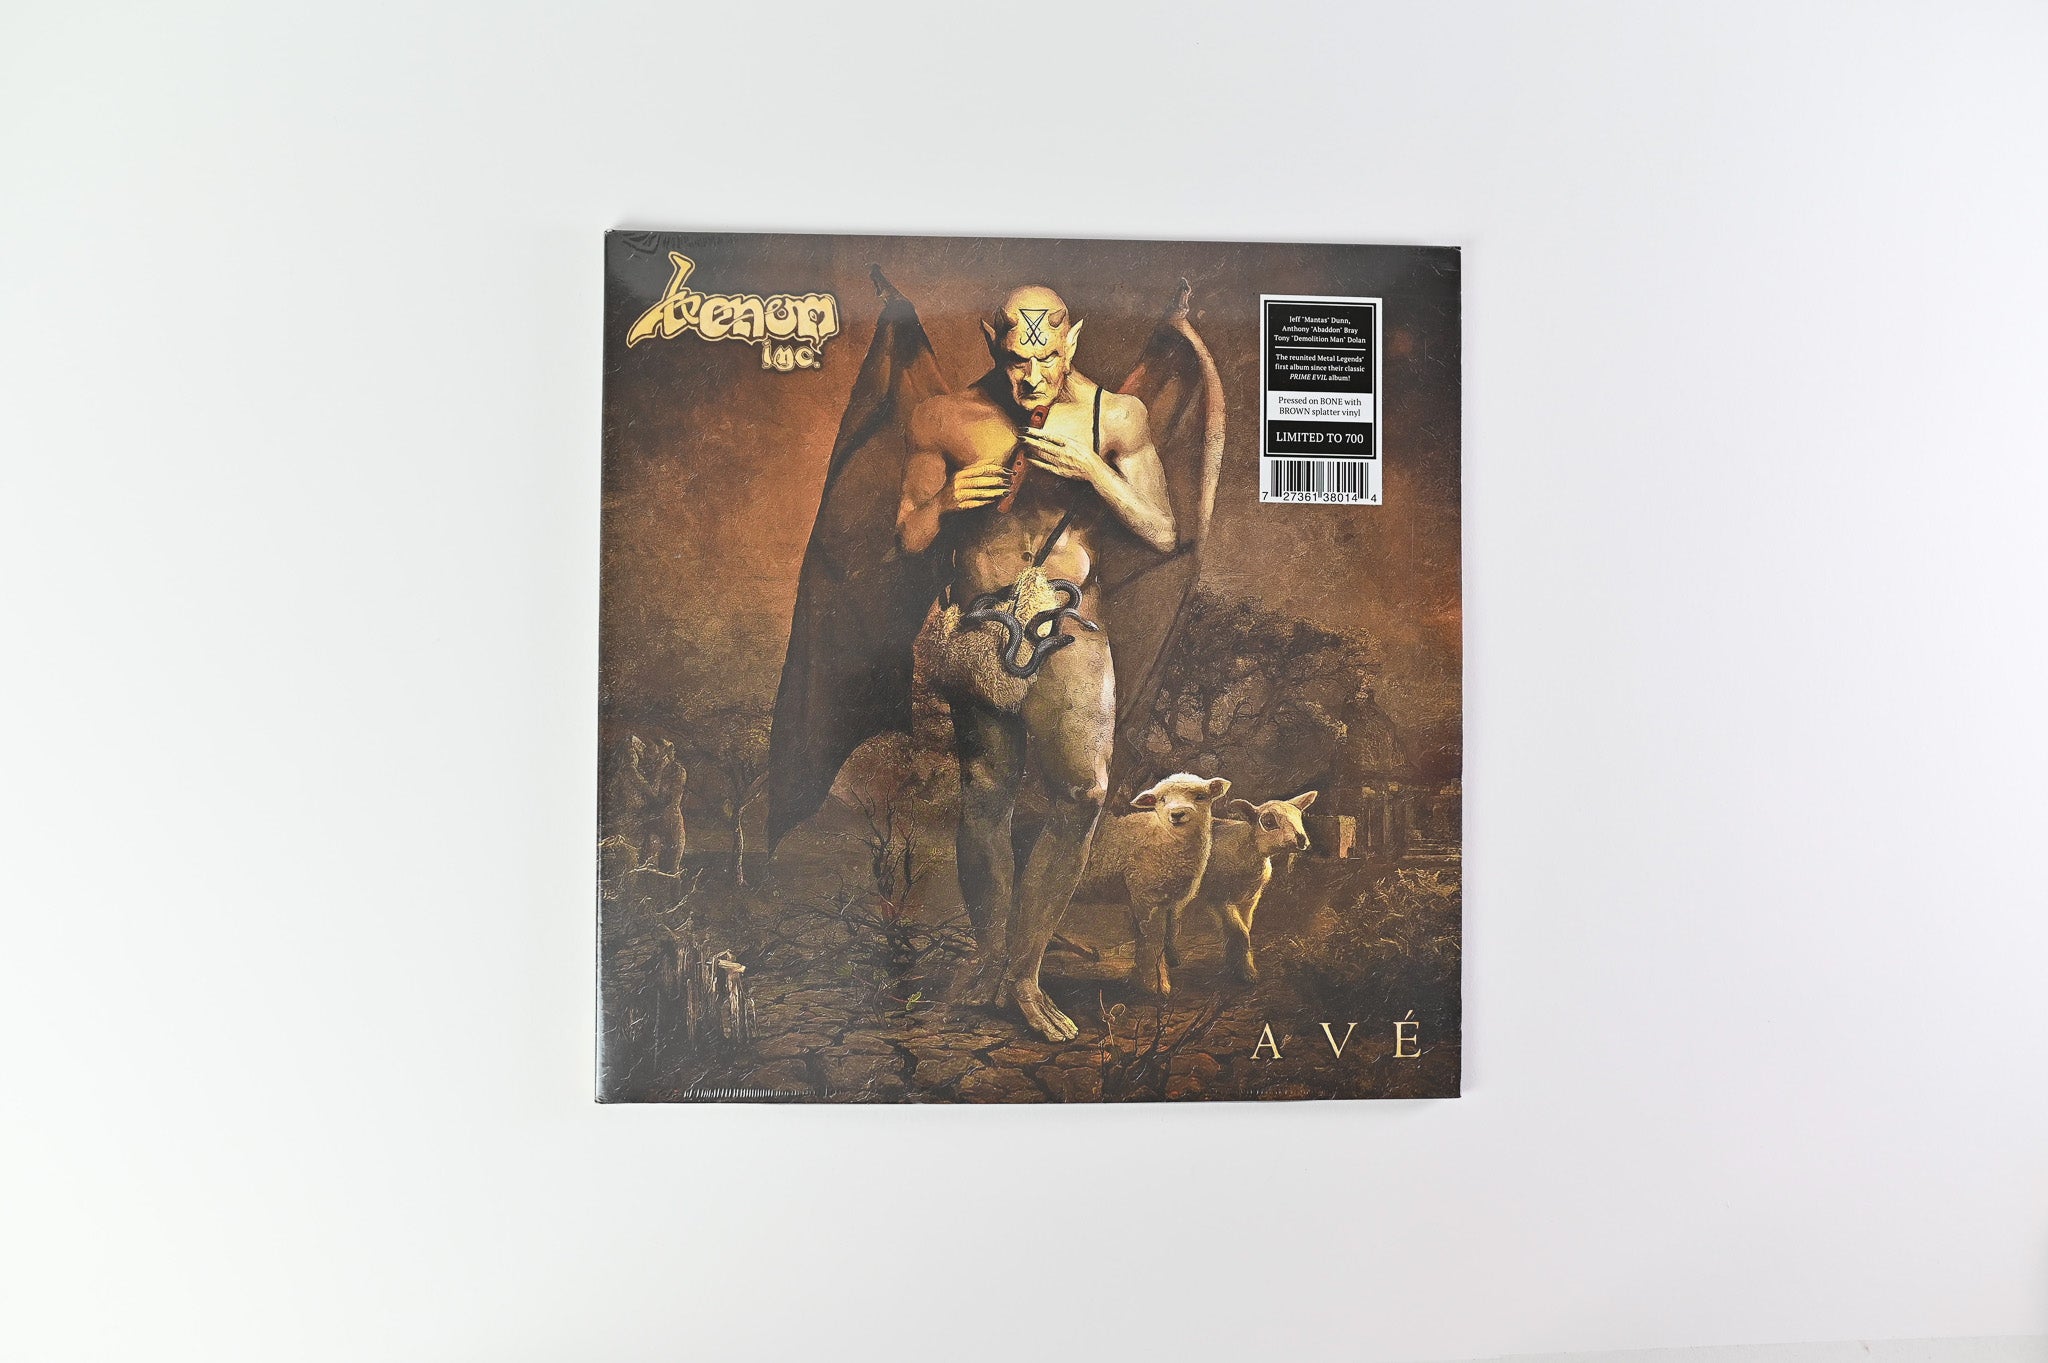 Venom Inc. - Avé on Nuclear Blast - Splatter Vinyl Sealed